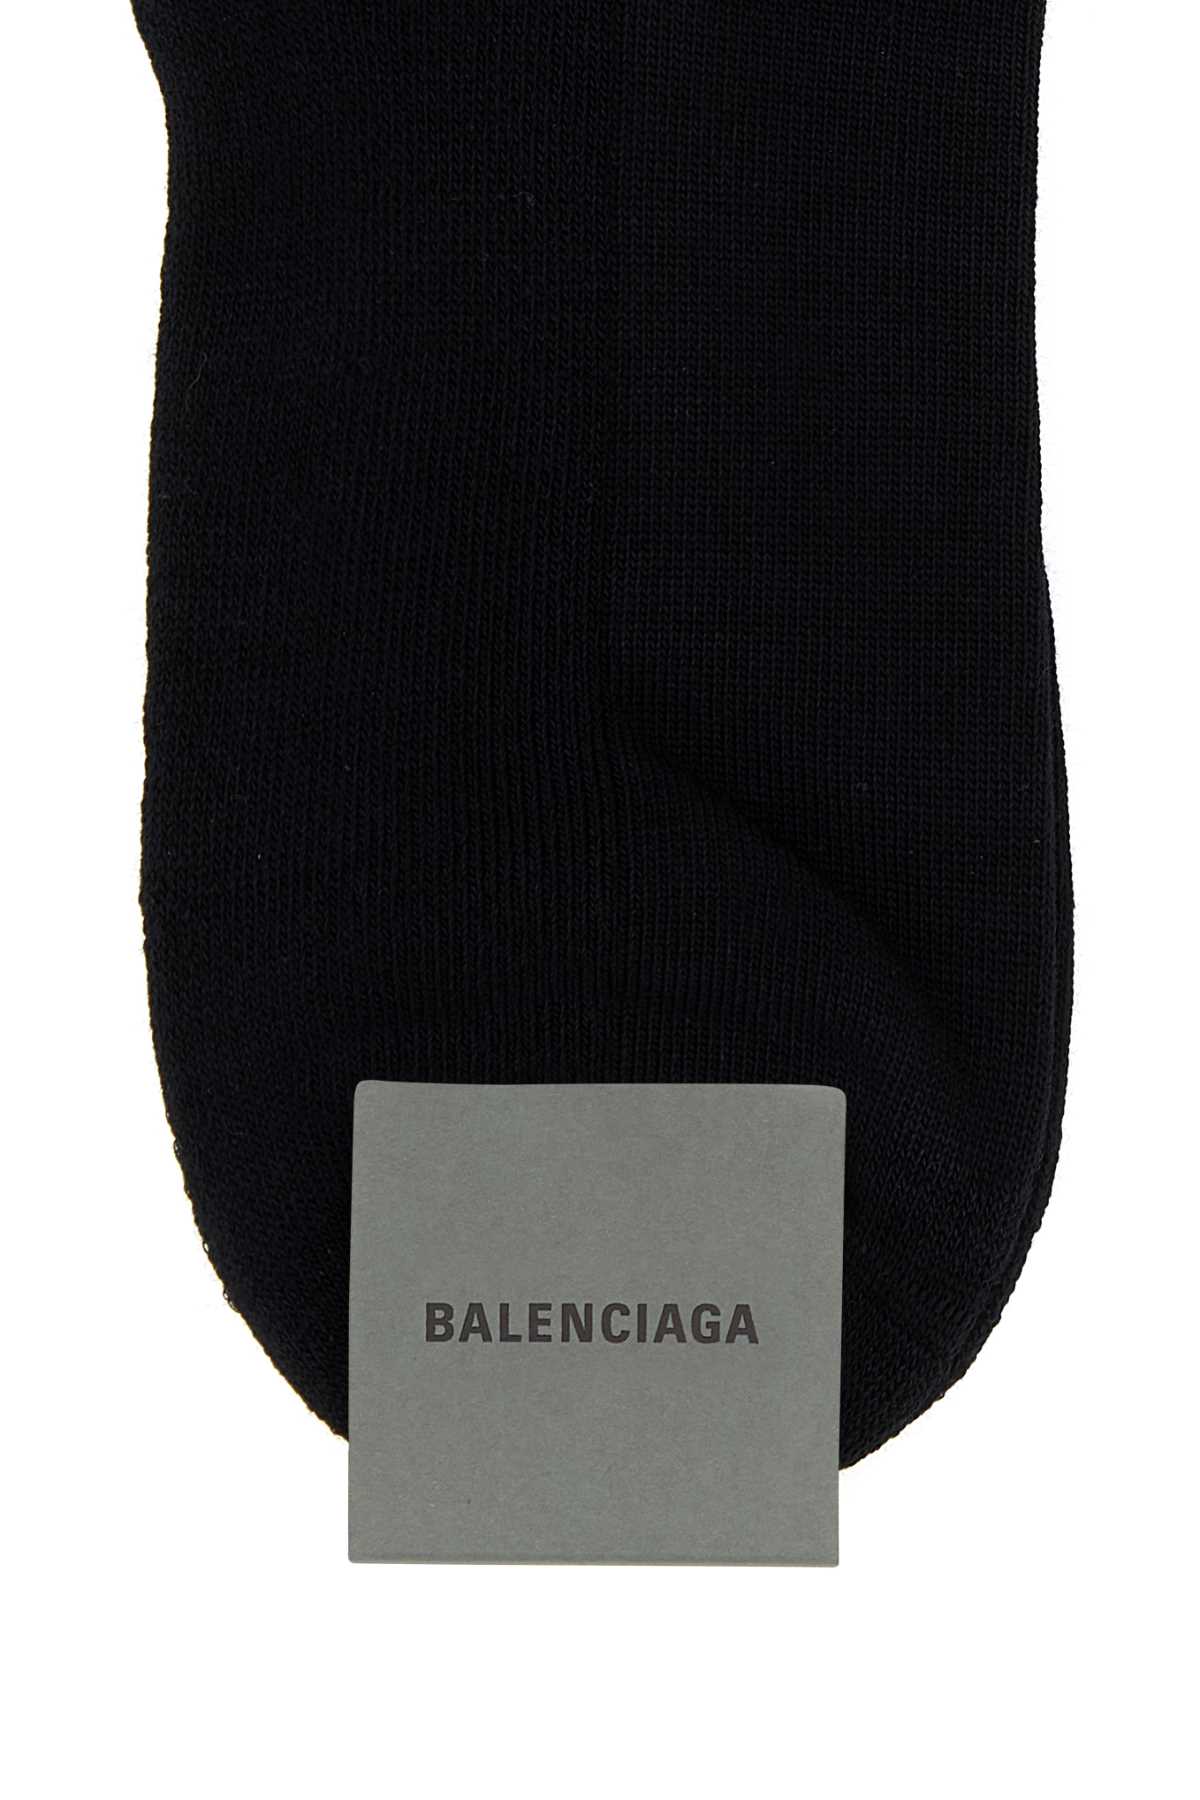 Balenciaga Black Stretch Cotton Blend Socks In Blackwhite